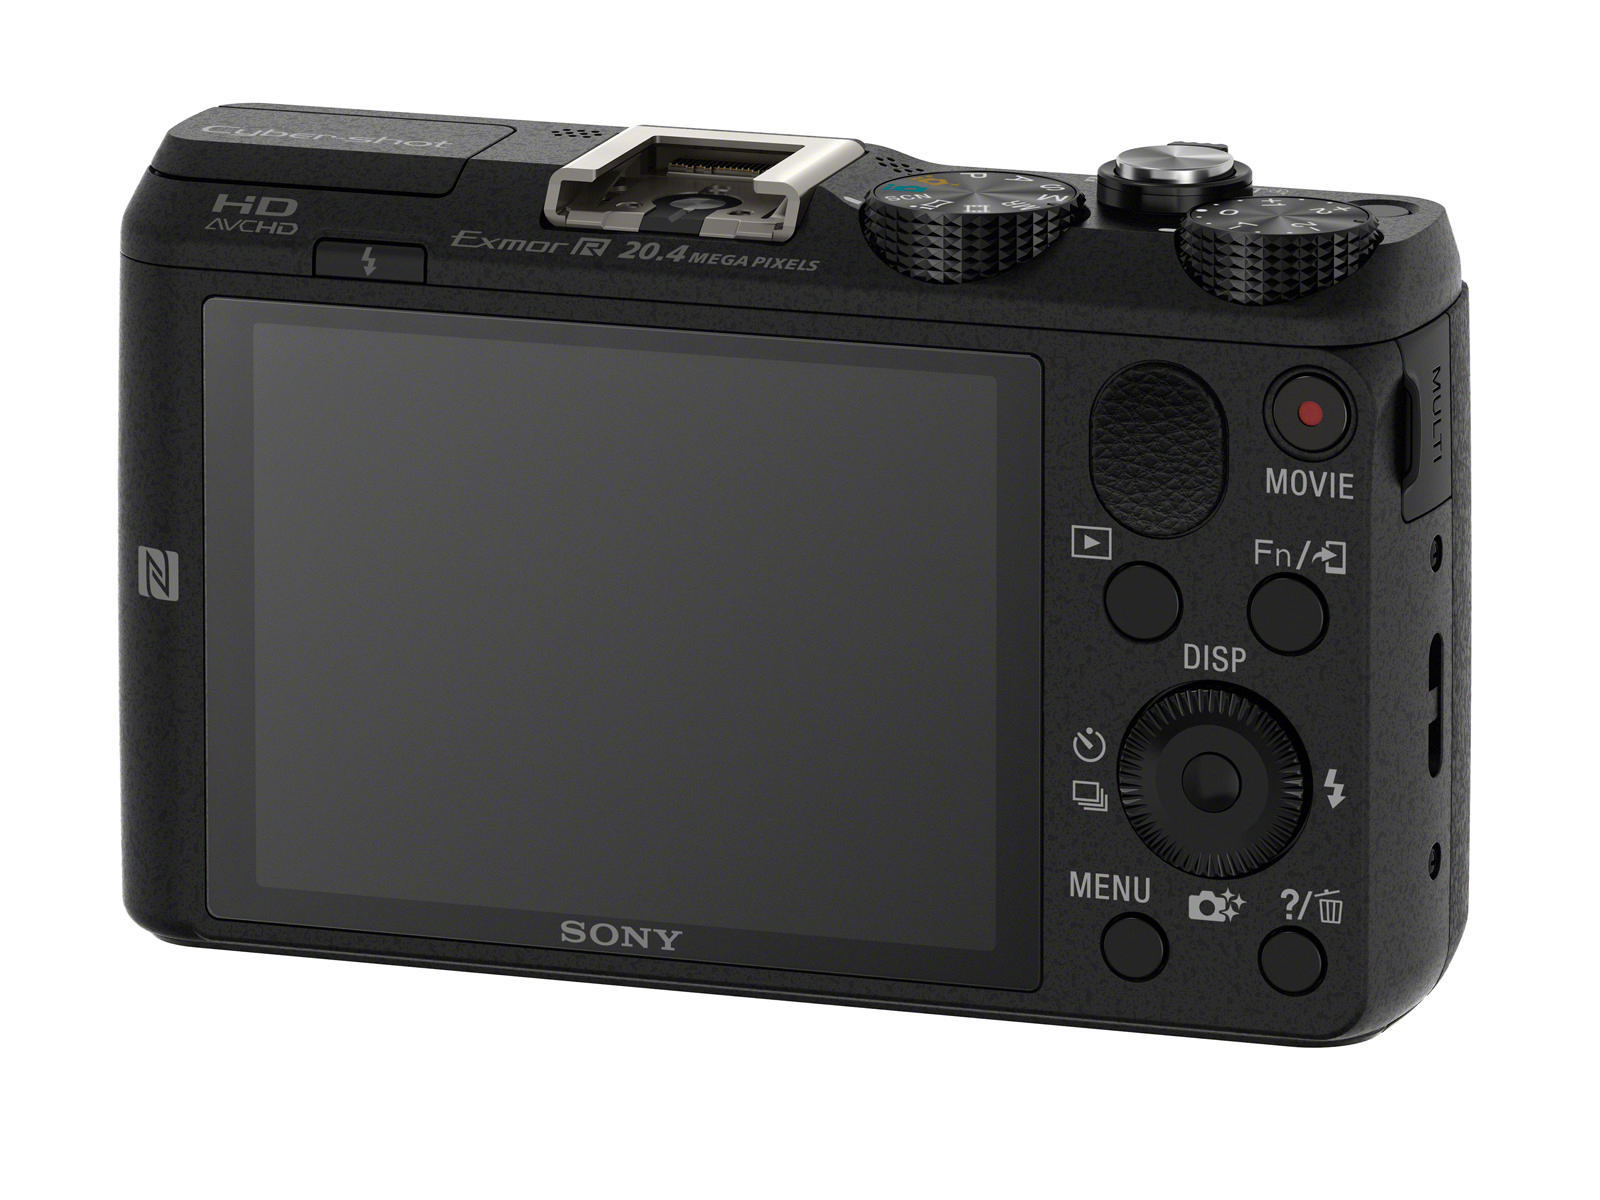 Digitalkamera , Xtra opt. WLAN 30x DSC-HX60 TFT-LCD, SONY NFC Fine, Zoom, Schwarz, Cyber-shot